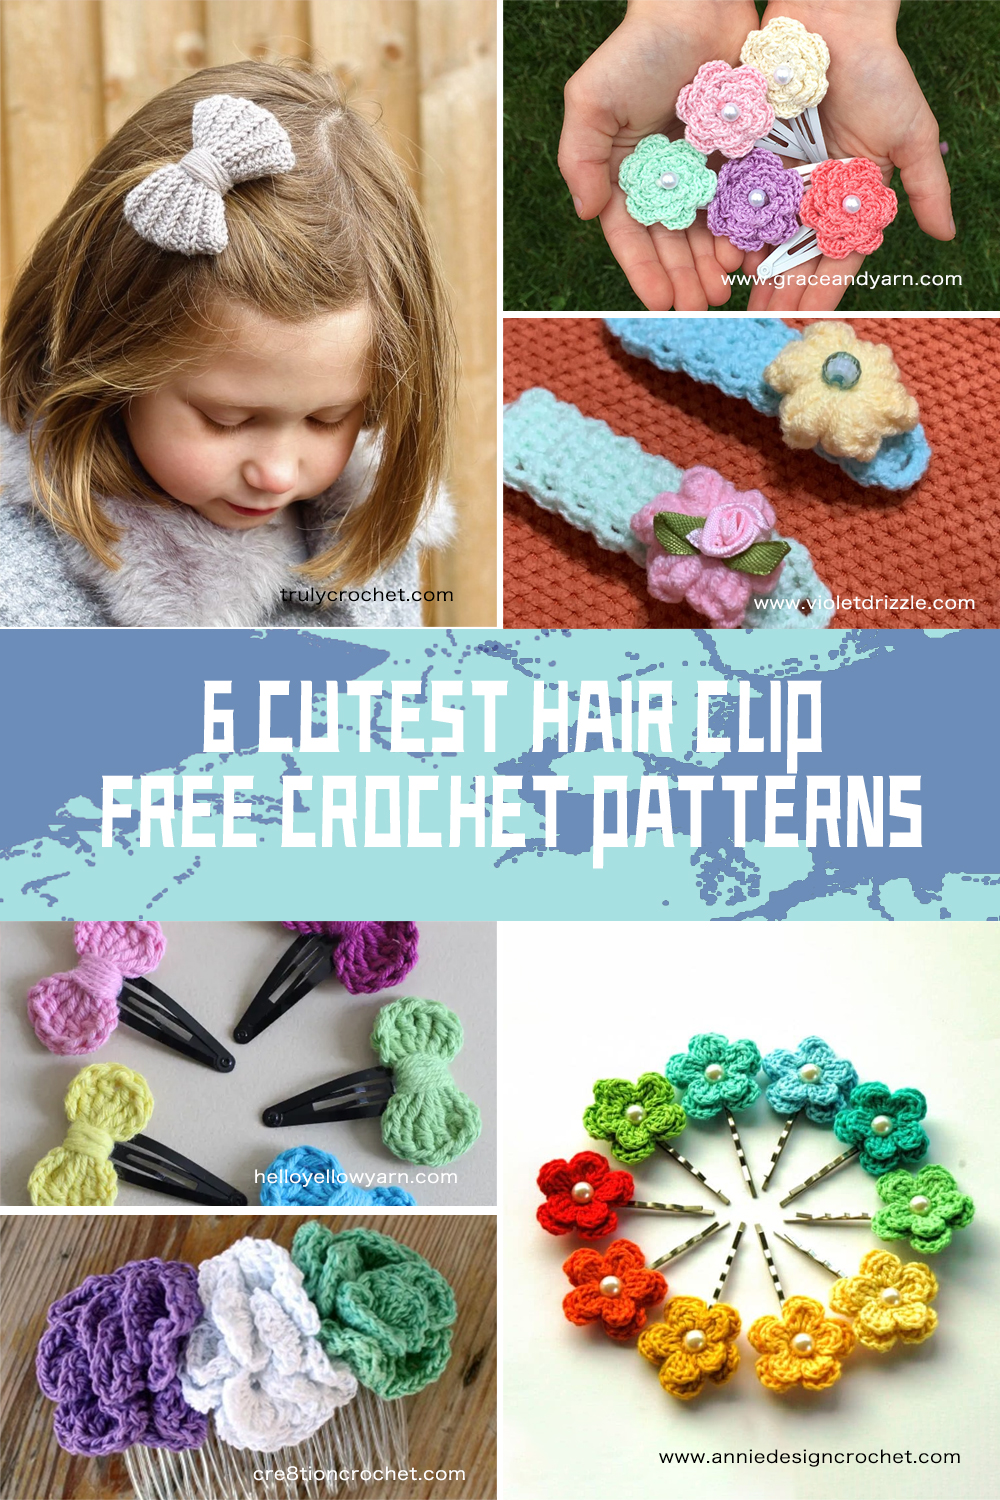 6 Cutest Hair Clip FREE Crochet Patterns